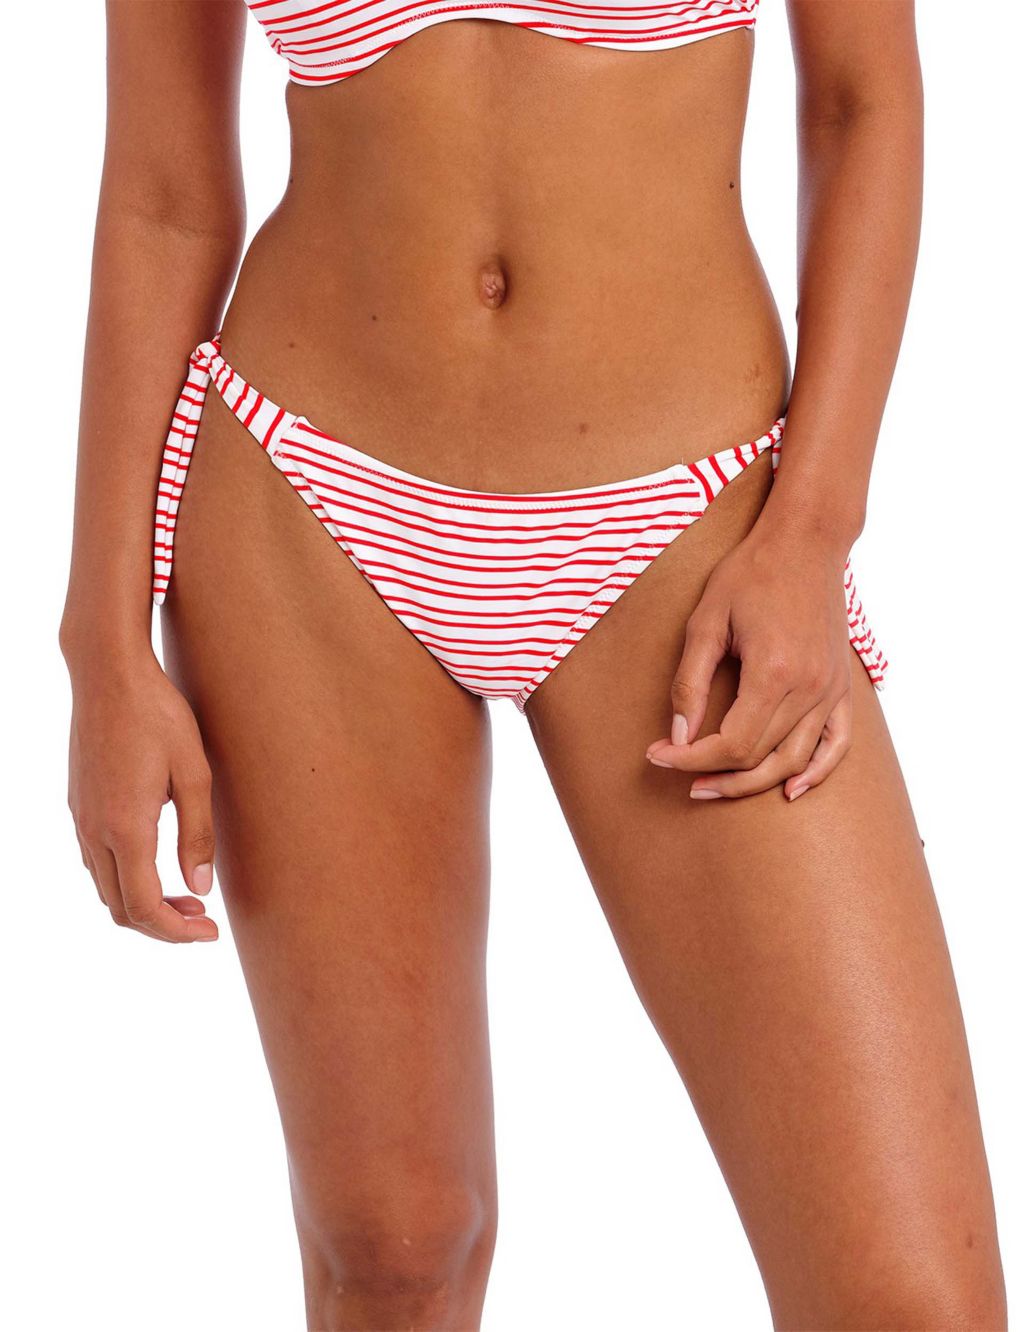 New Shores Striped Hipster Bikini Bottoms image 1